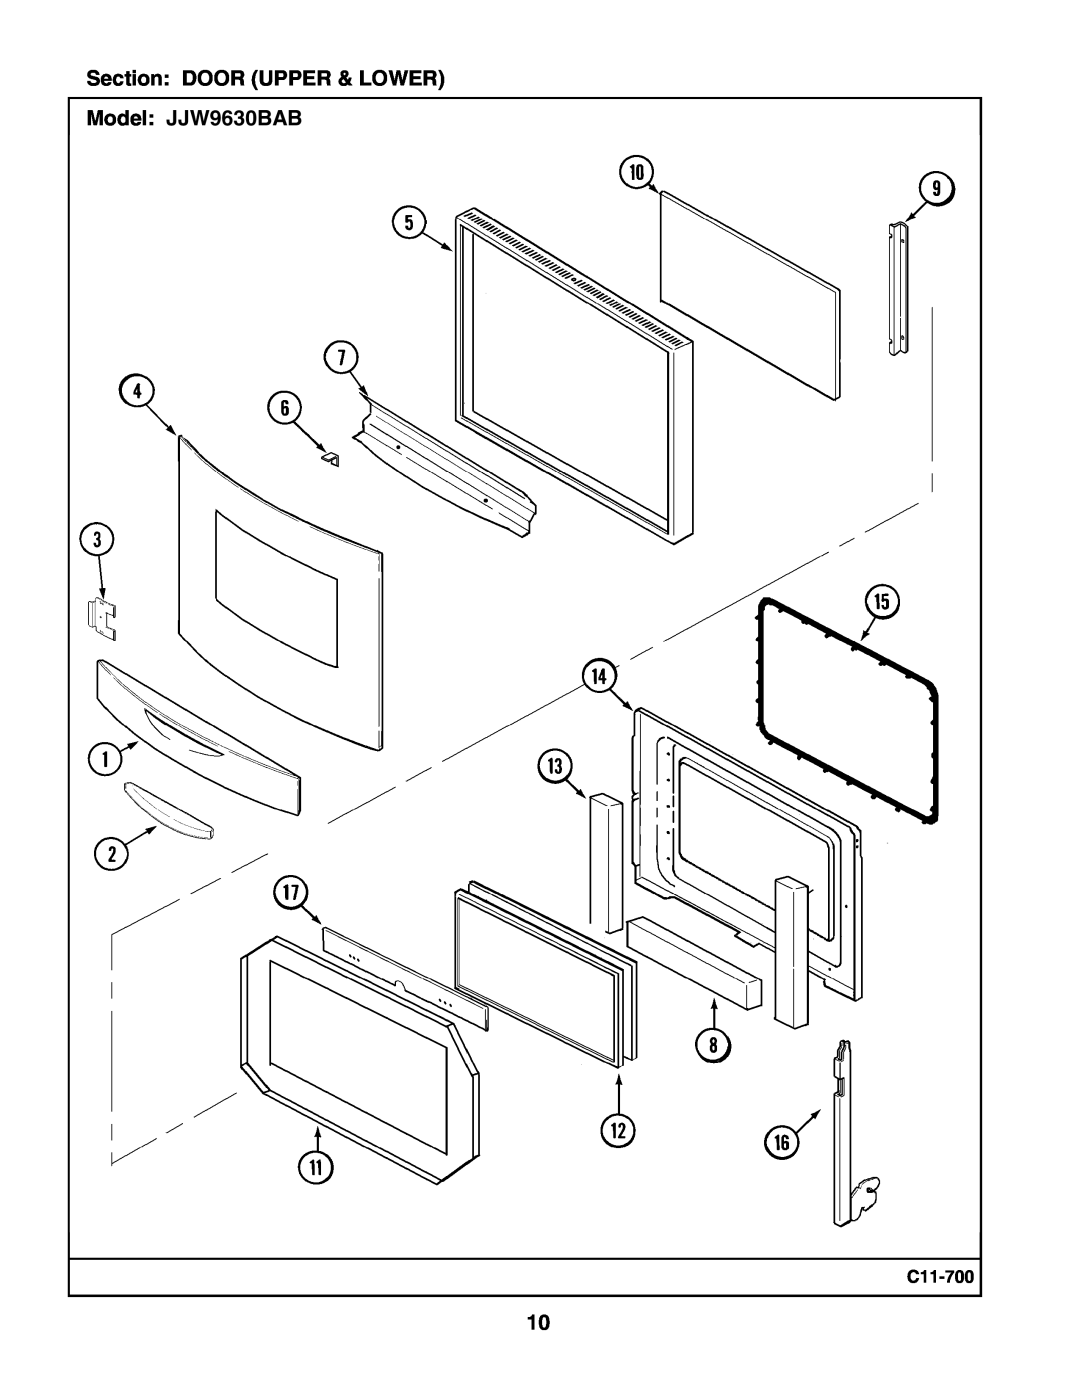 Maytag manual Section DOOR UPPER & LOWER Model JJW9630BAB, C11-700 